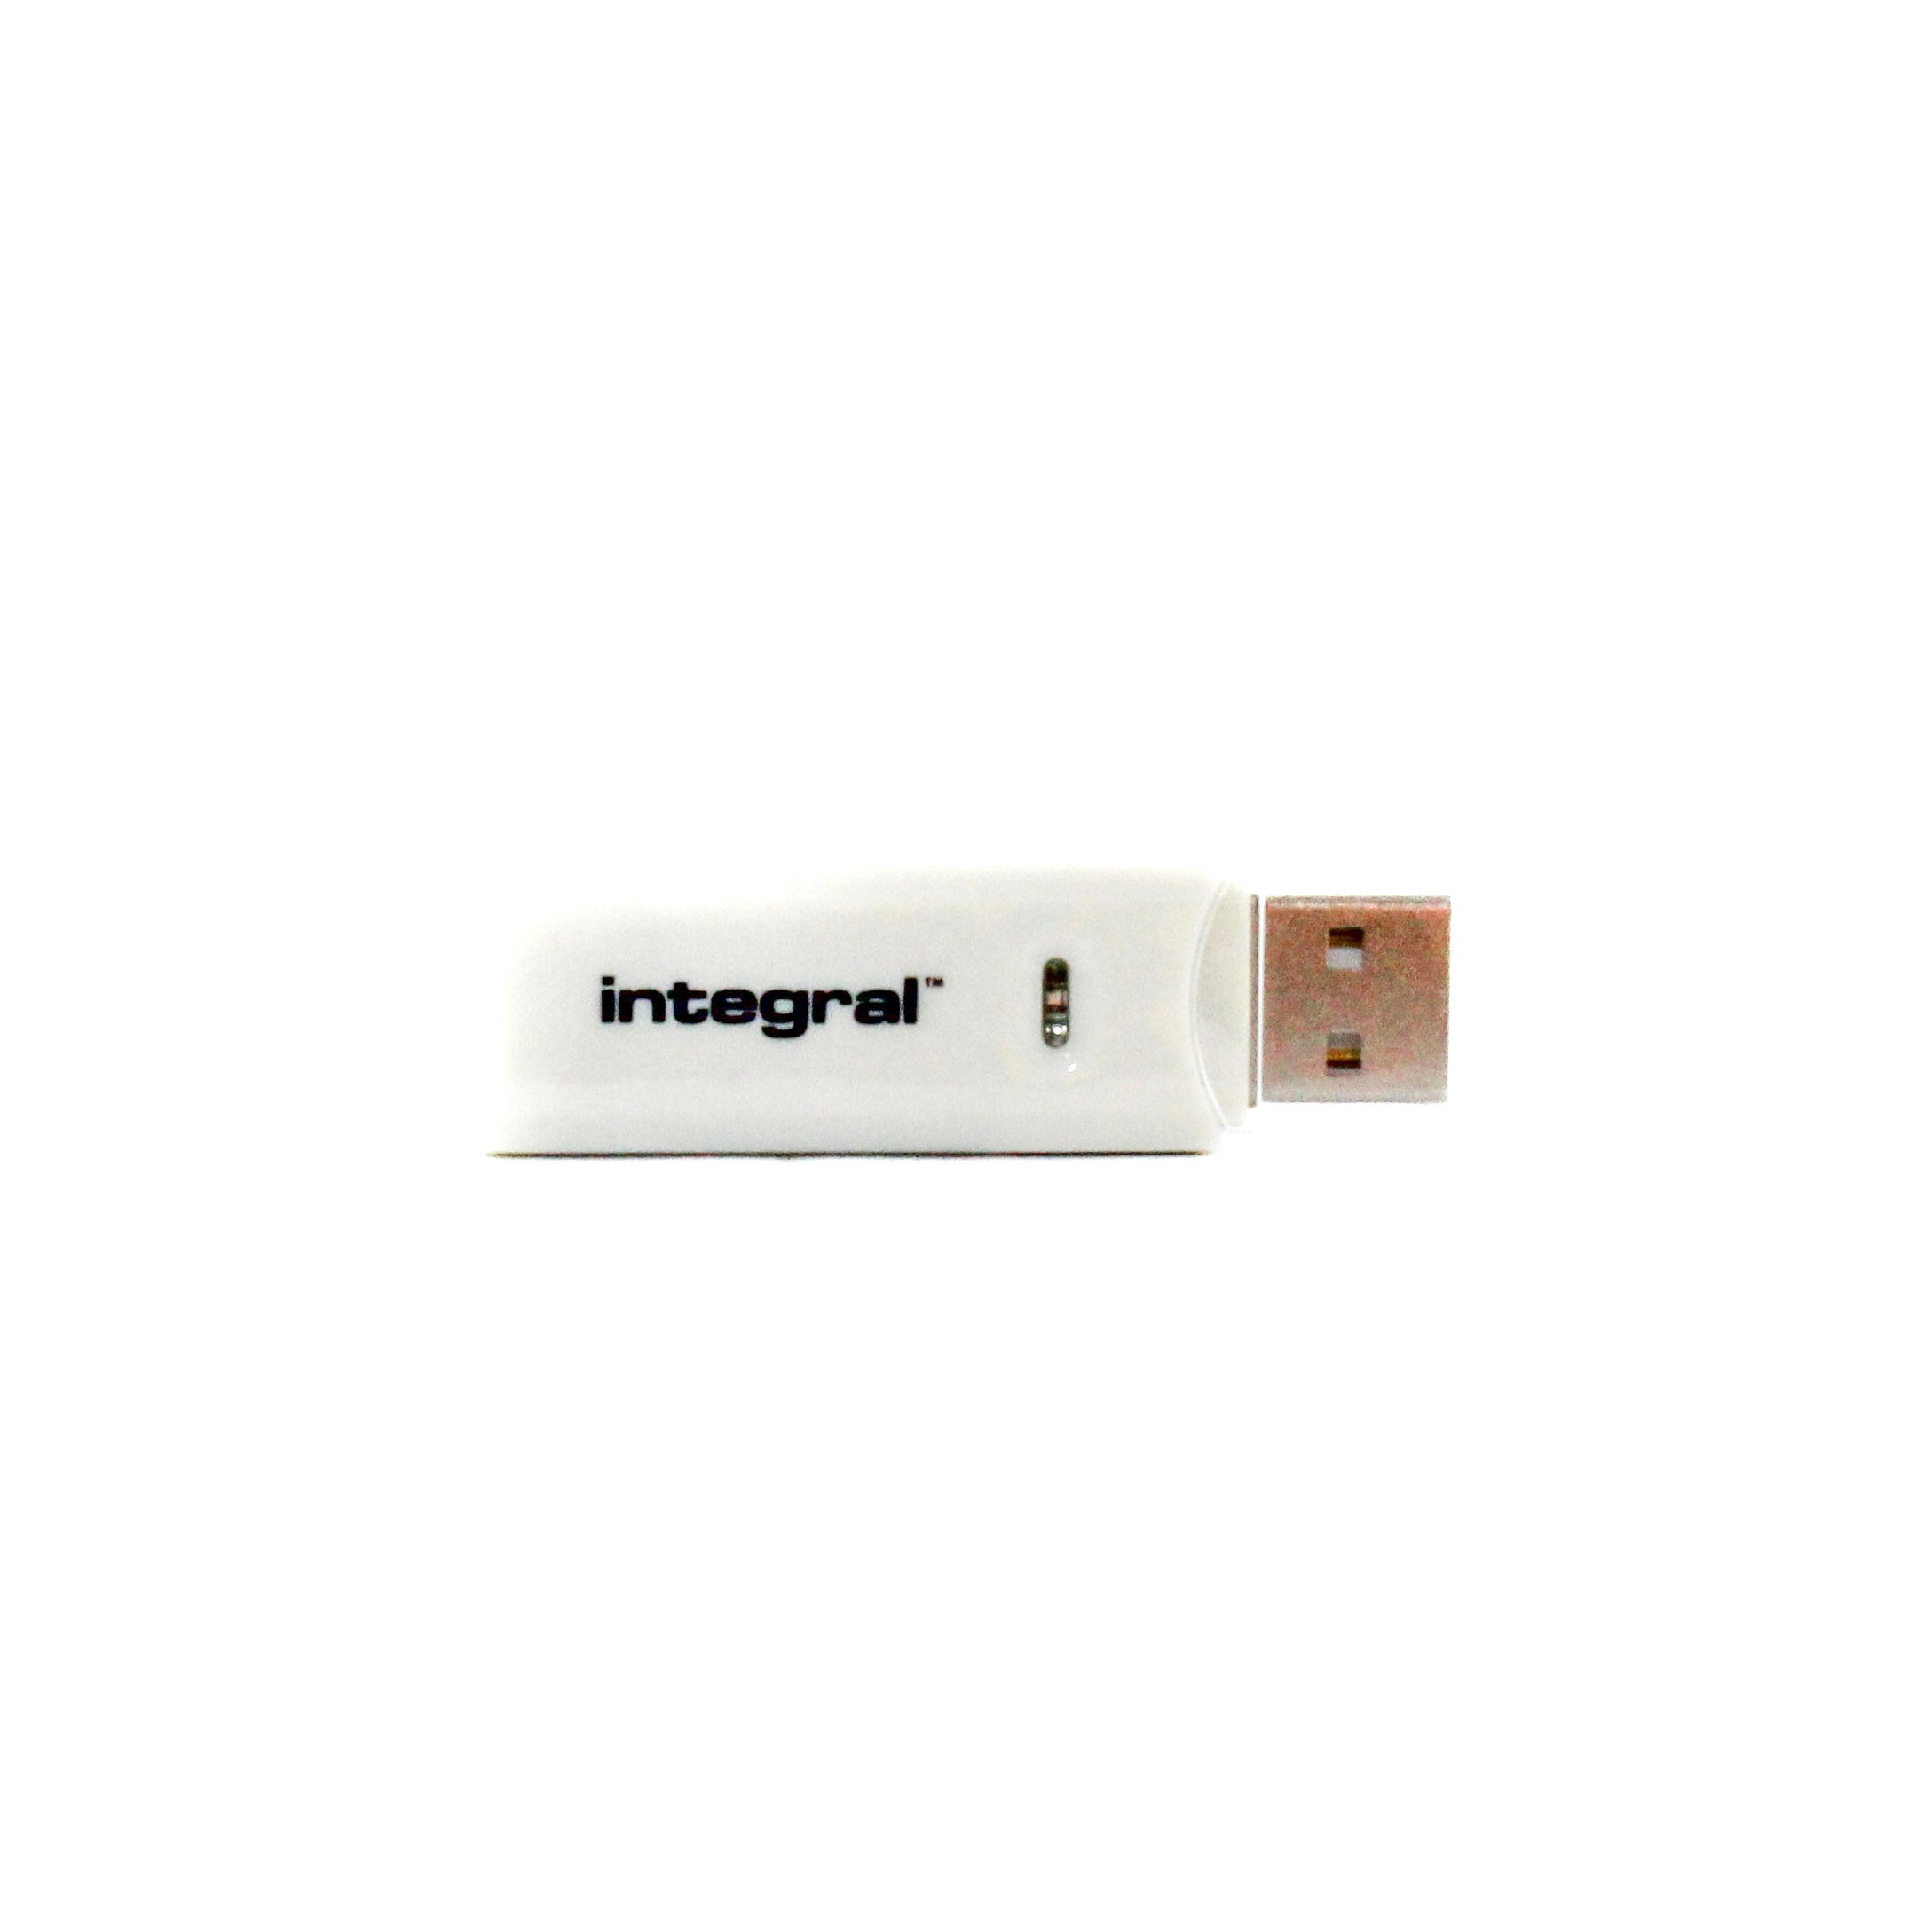 Integral USB 2.0 Dual Slot Card Reader